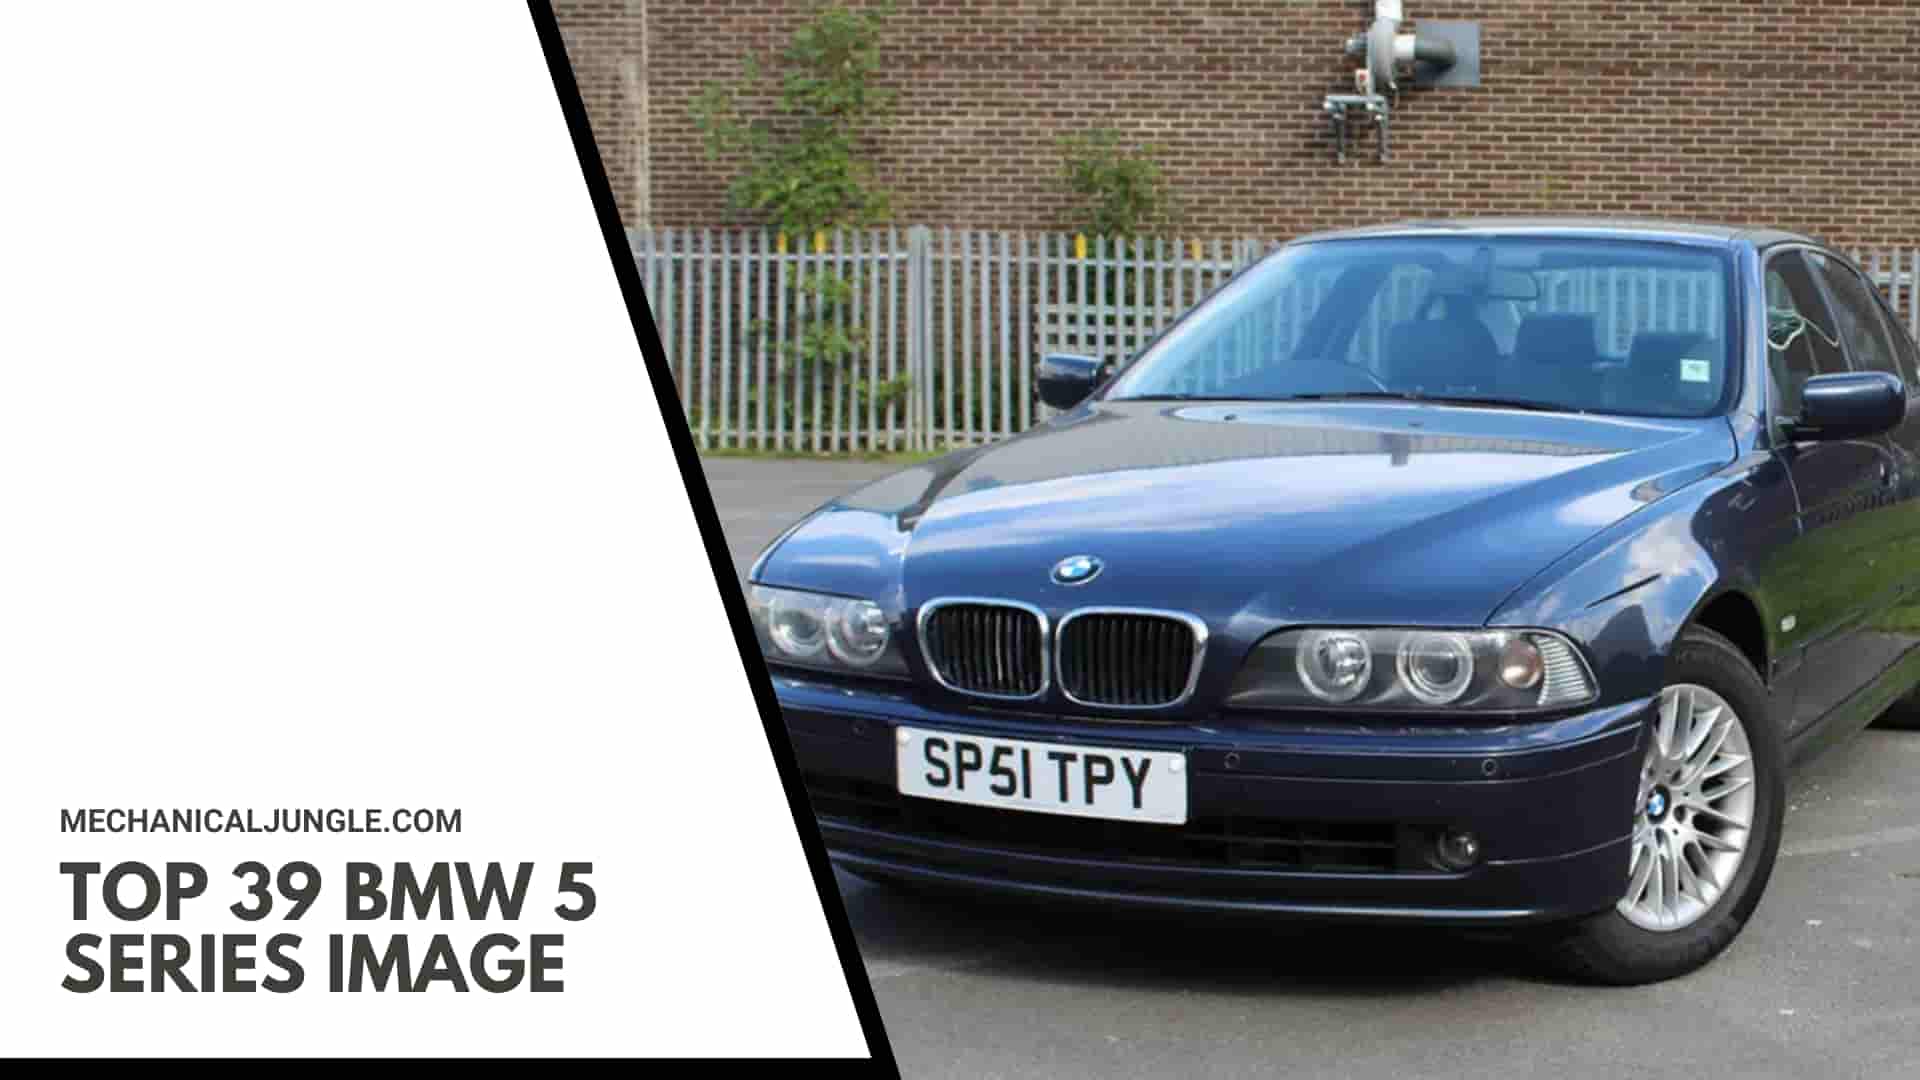 Top 39 BMW 5 Series Image